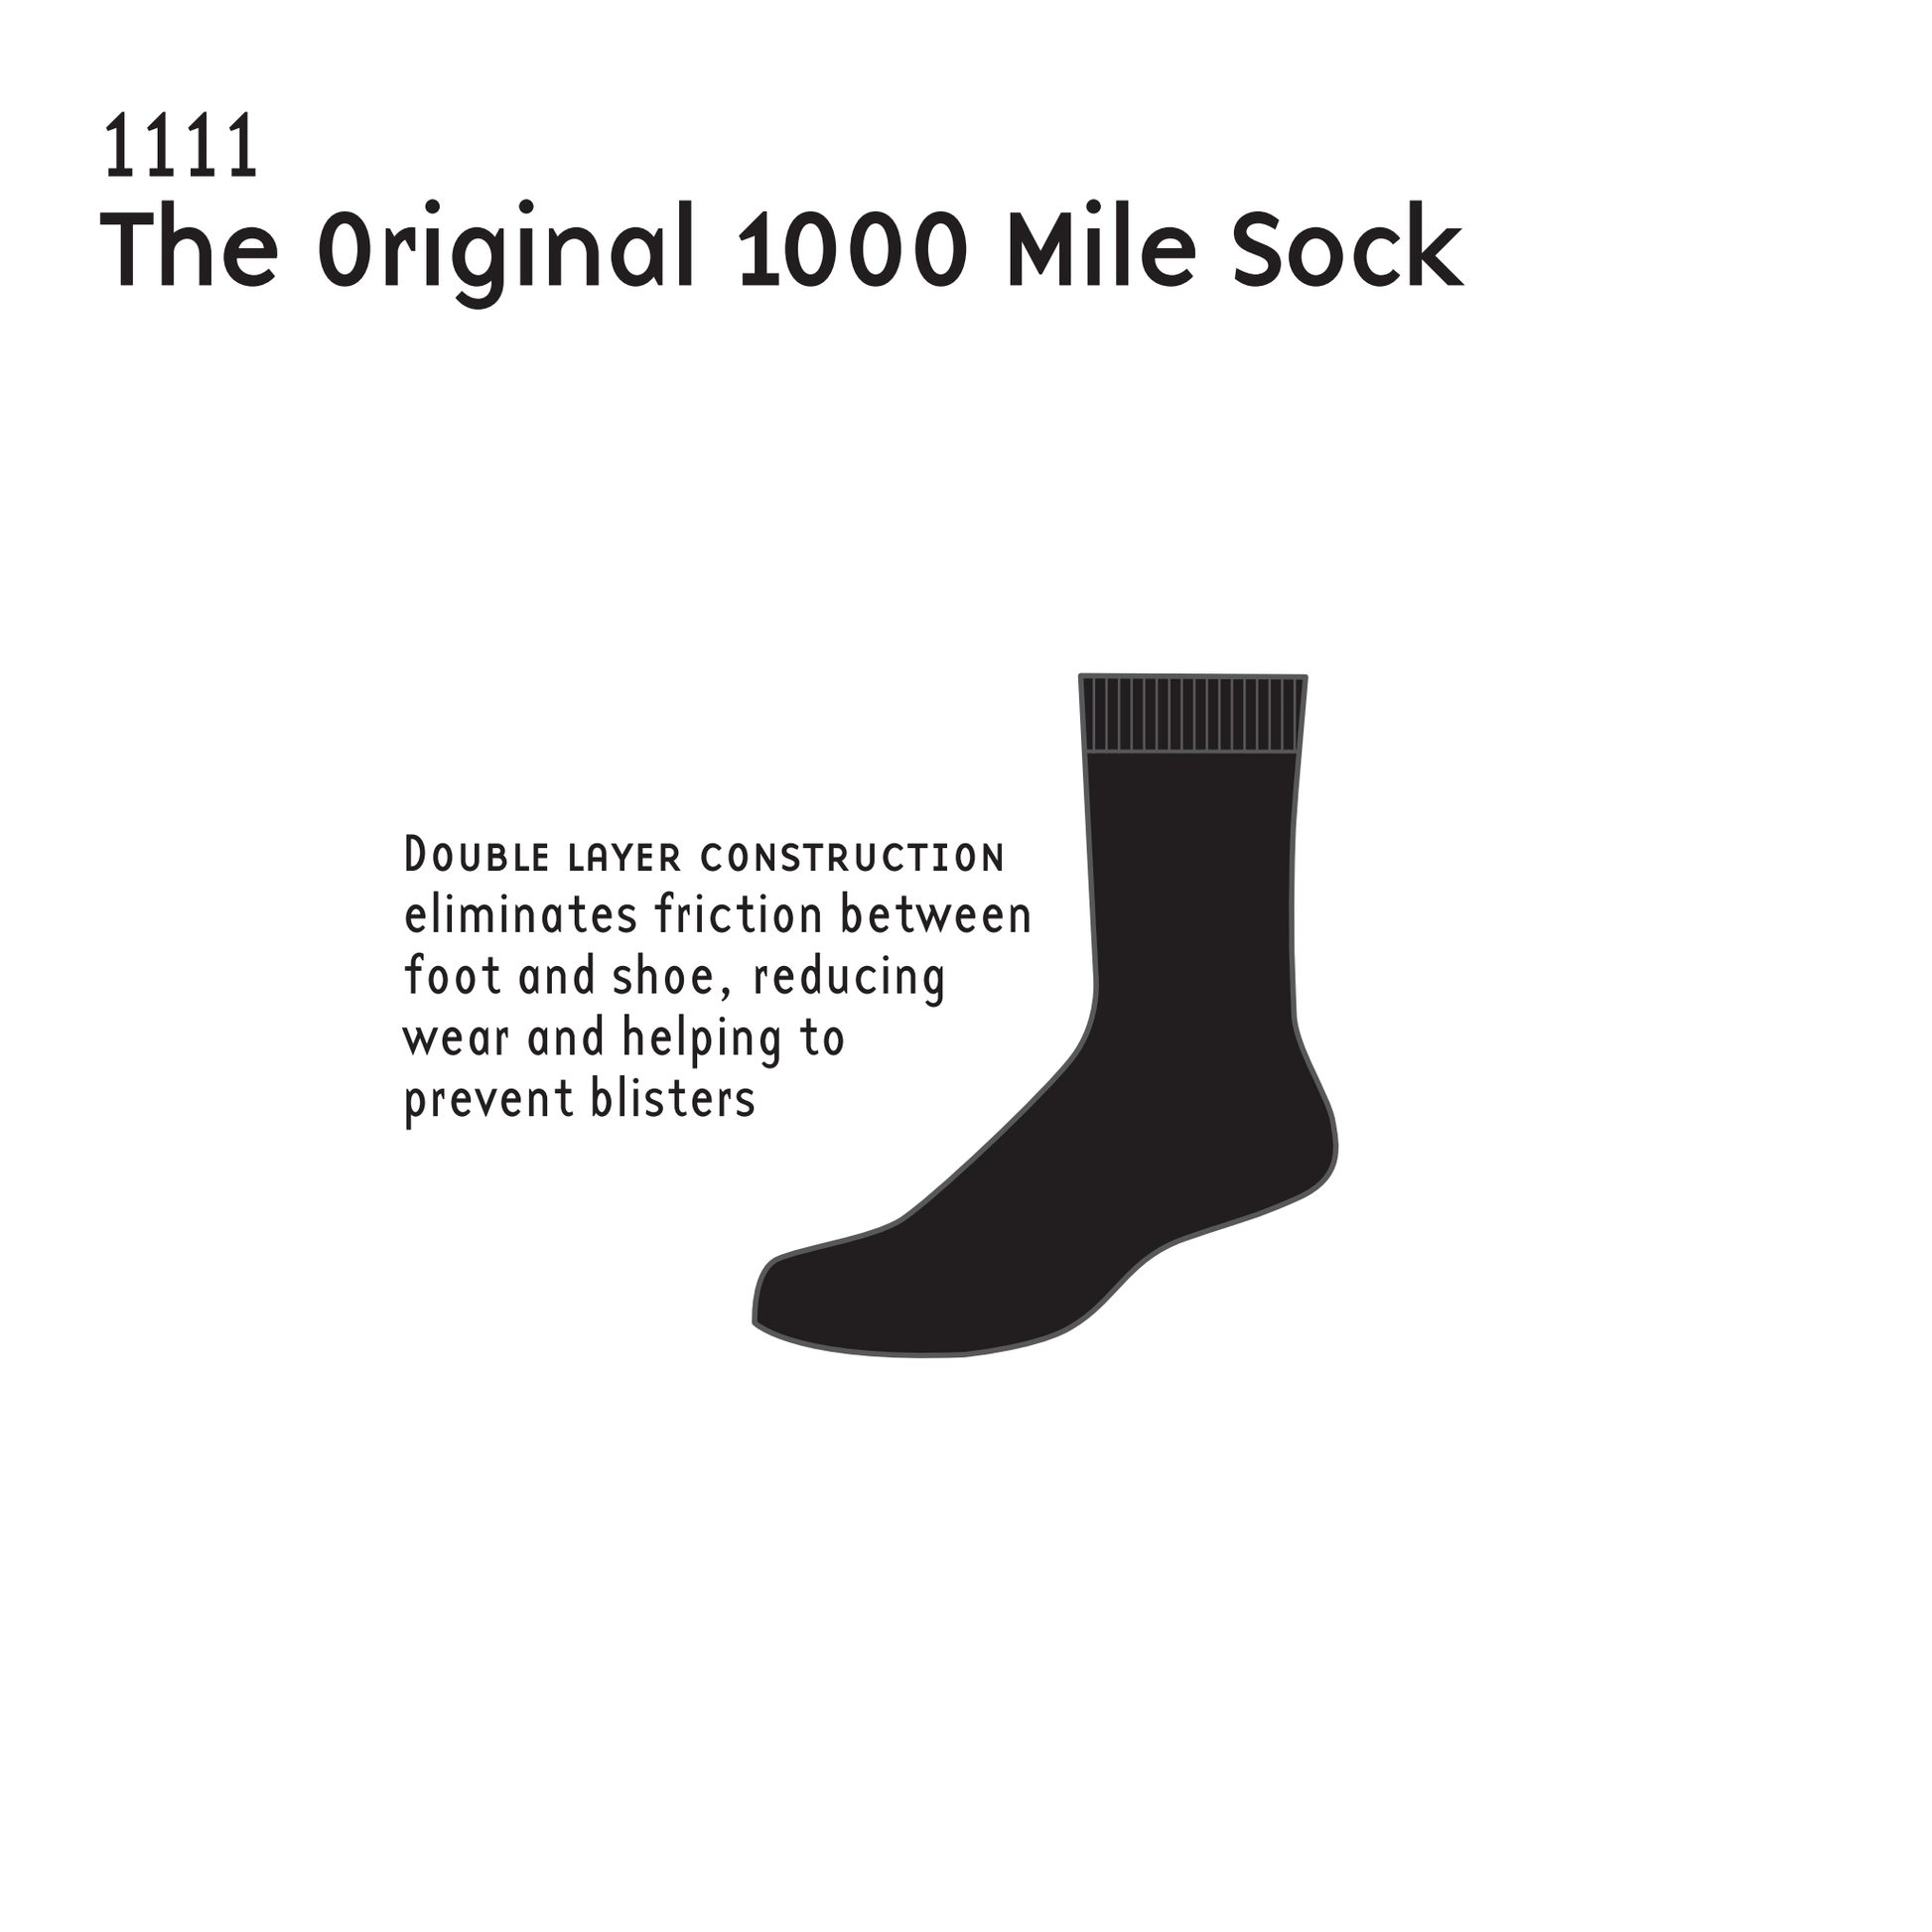 Original Double Layer Sock features